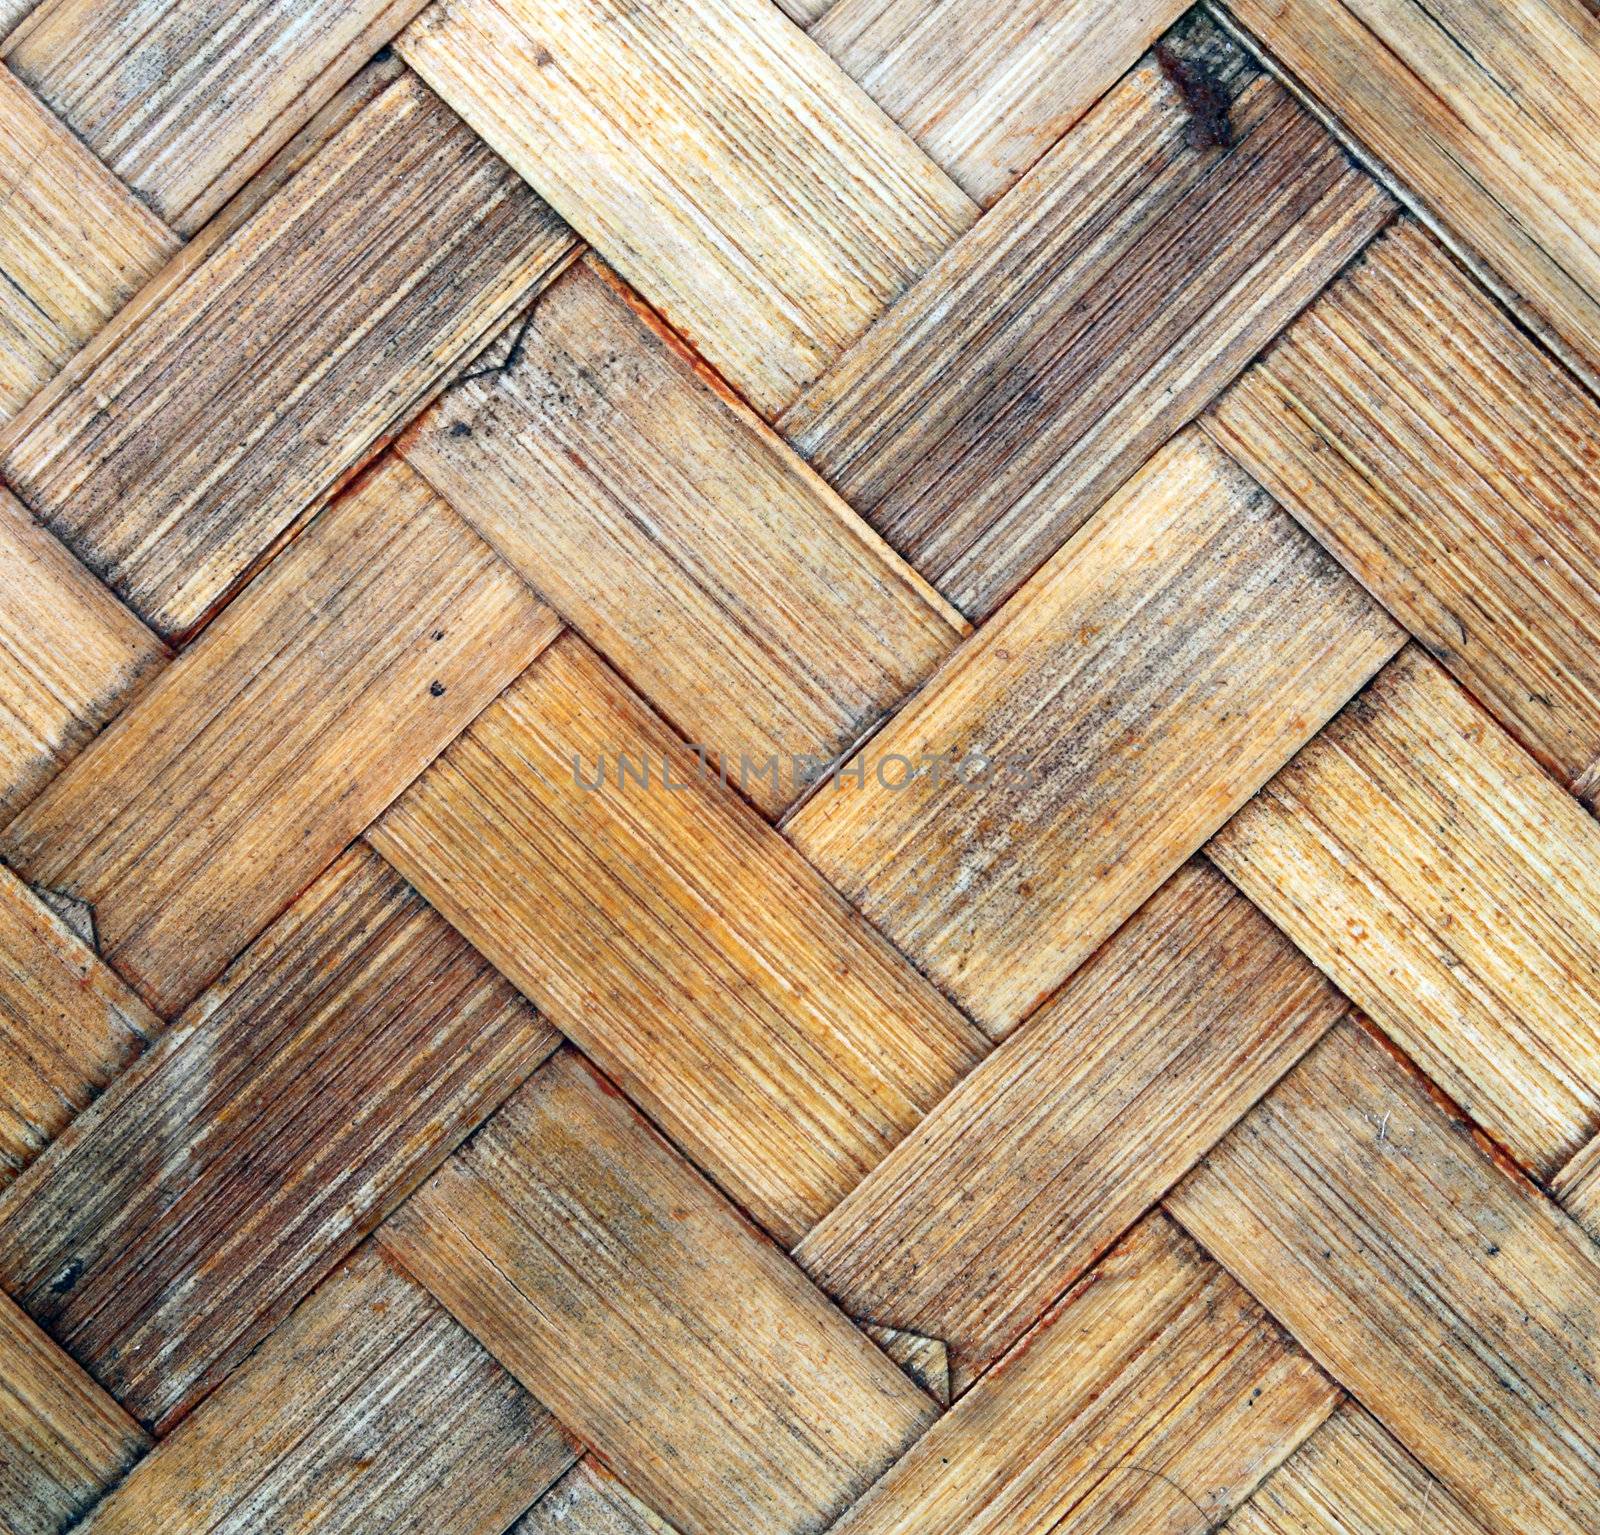 Bamboo wooden texture by geargodz